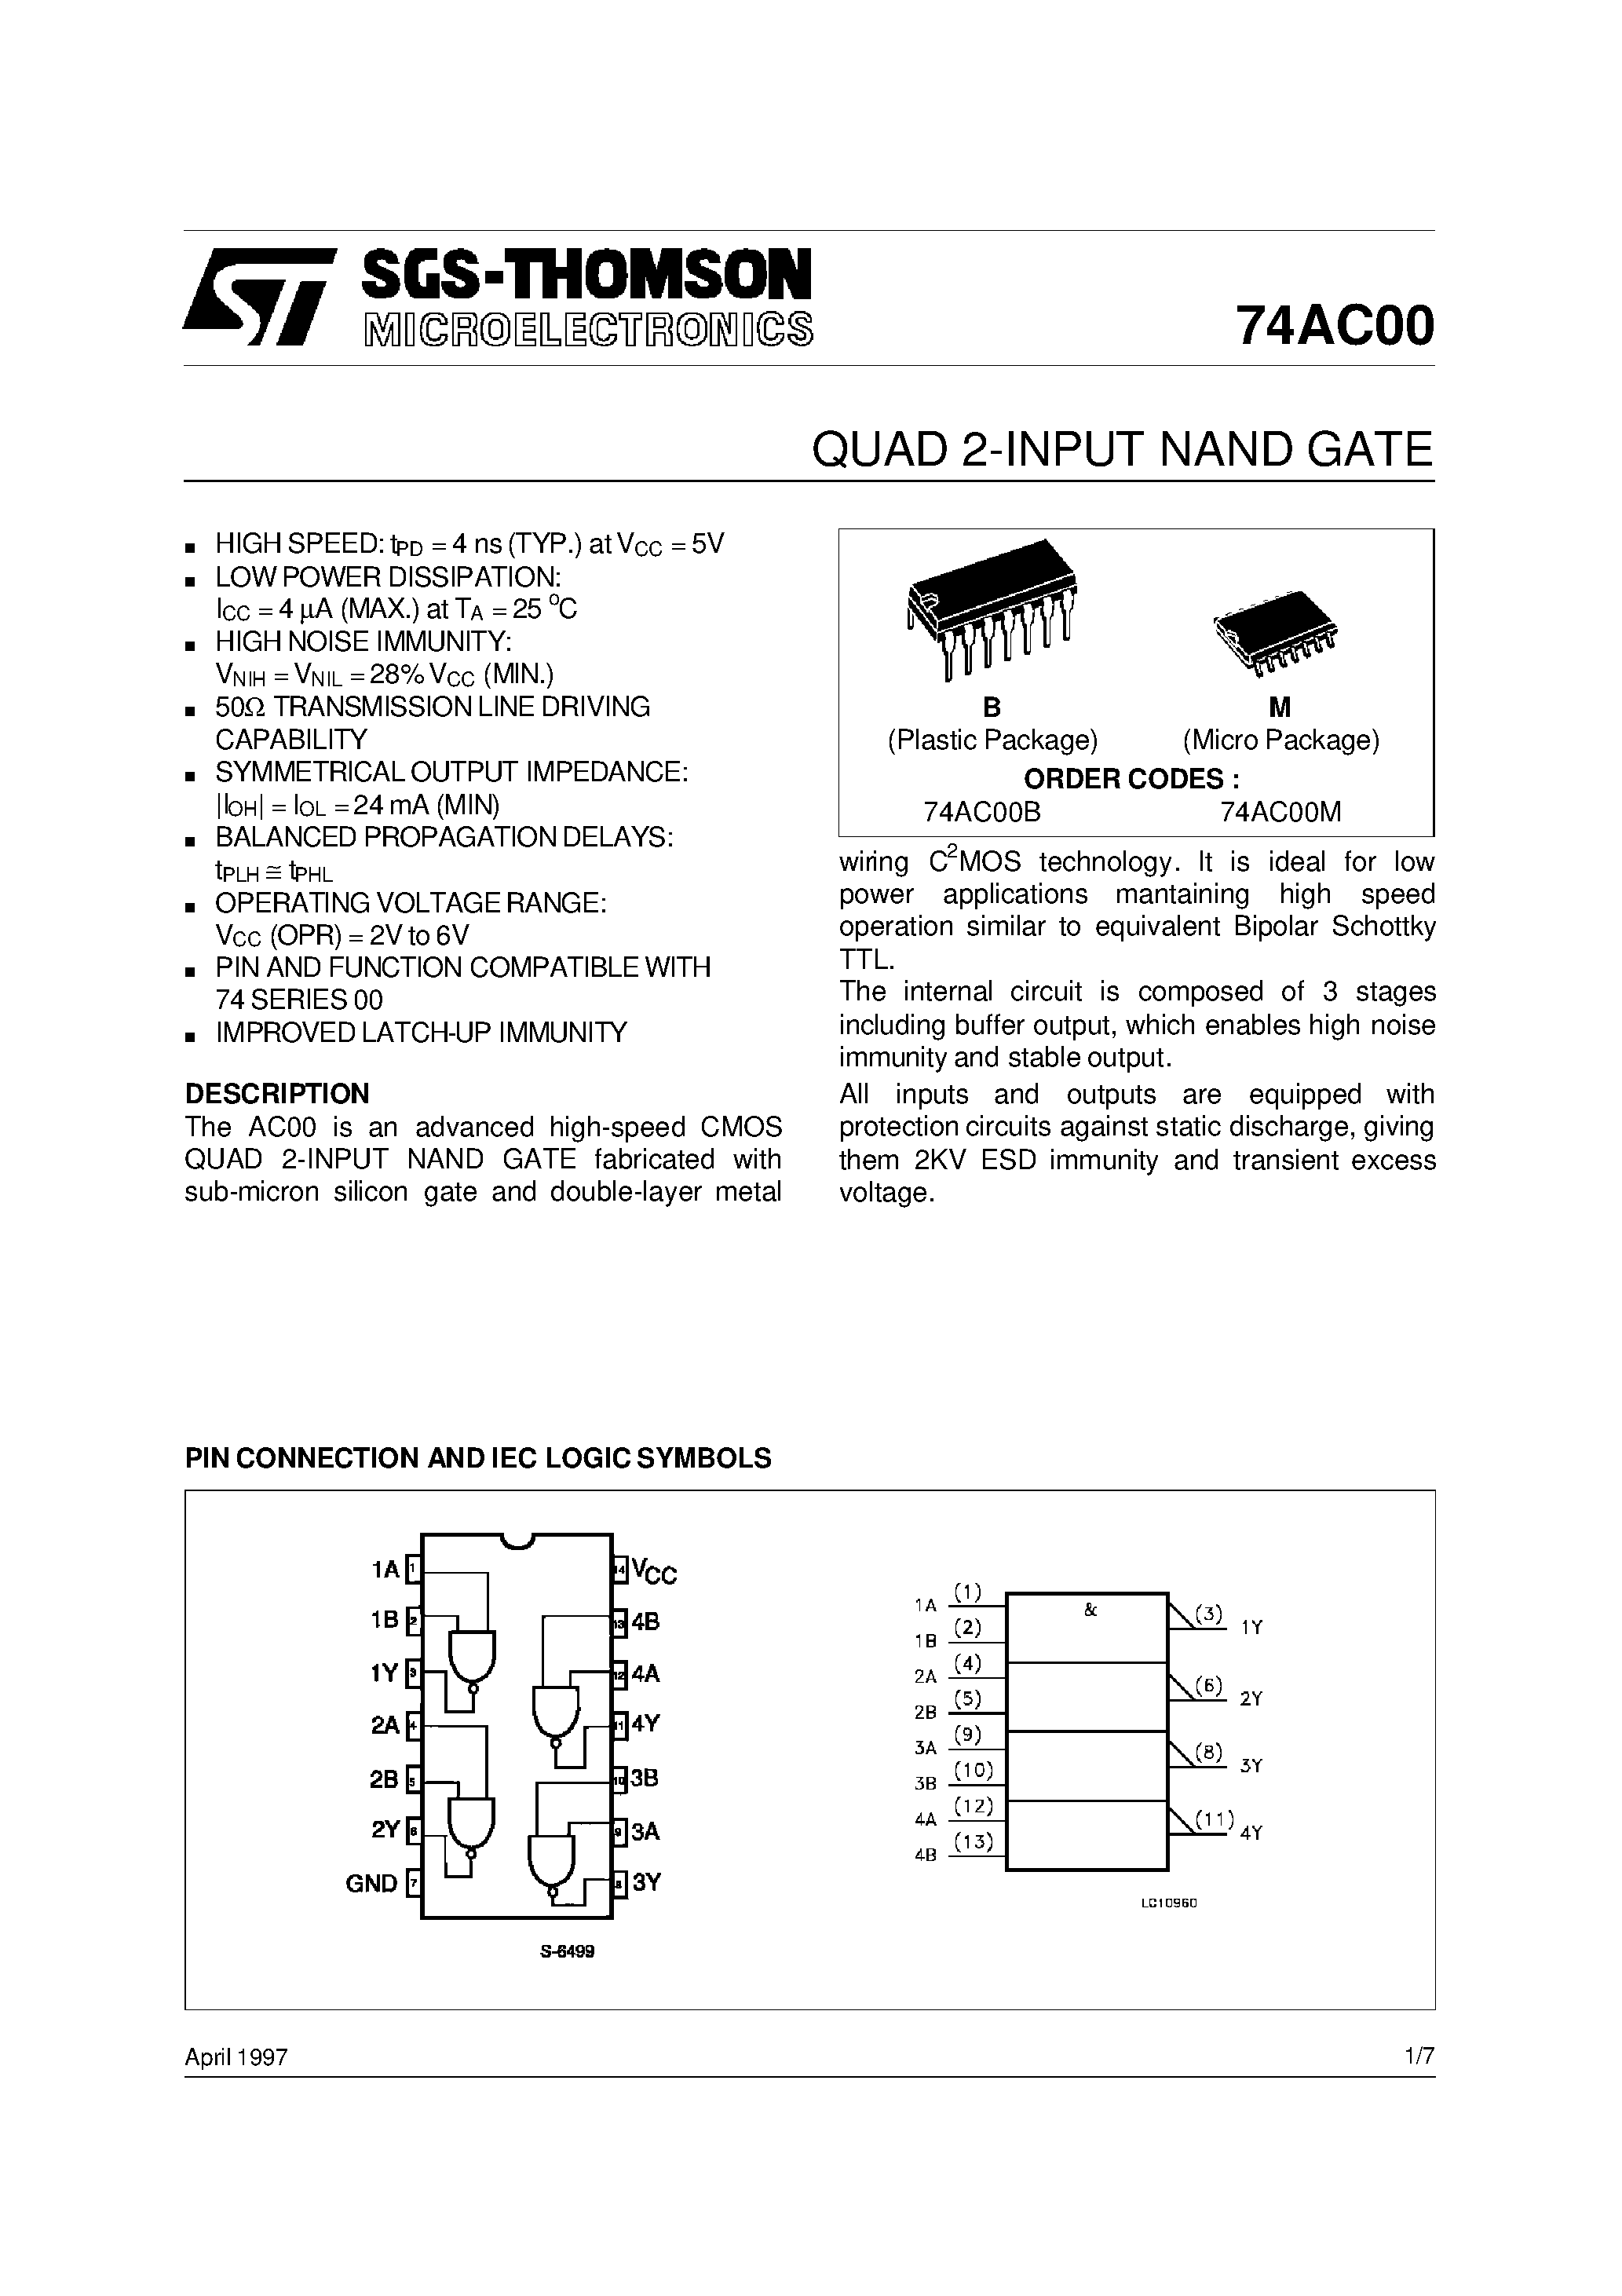 Datasheet 74AC00M - QUAD 2-INPUT NAND GATE page 1